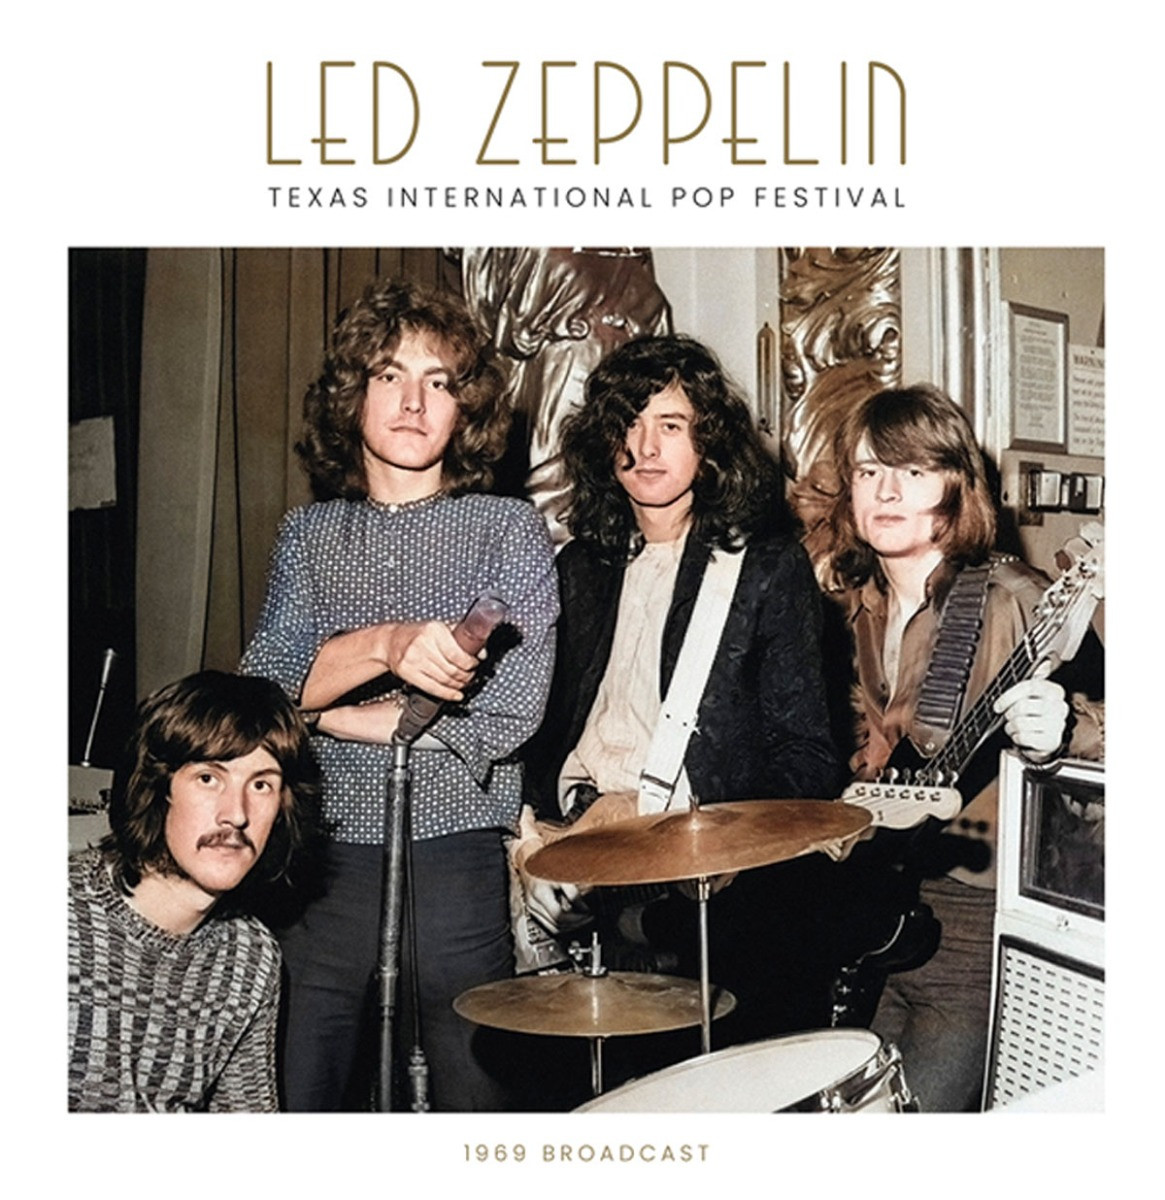 Led Zeppelin - Texas International Pop Festival 1969 Broadcast 2LP